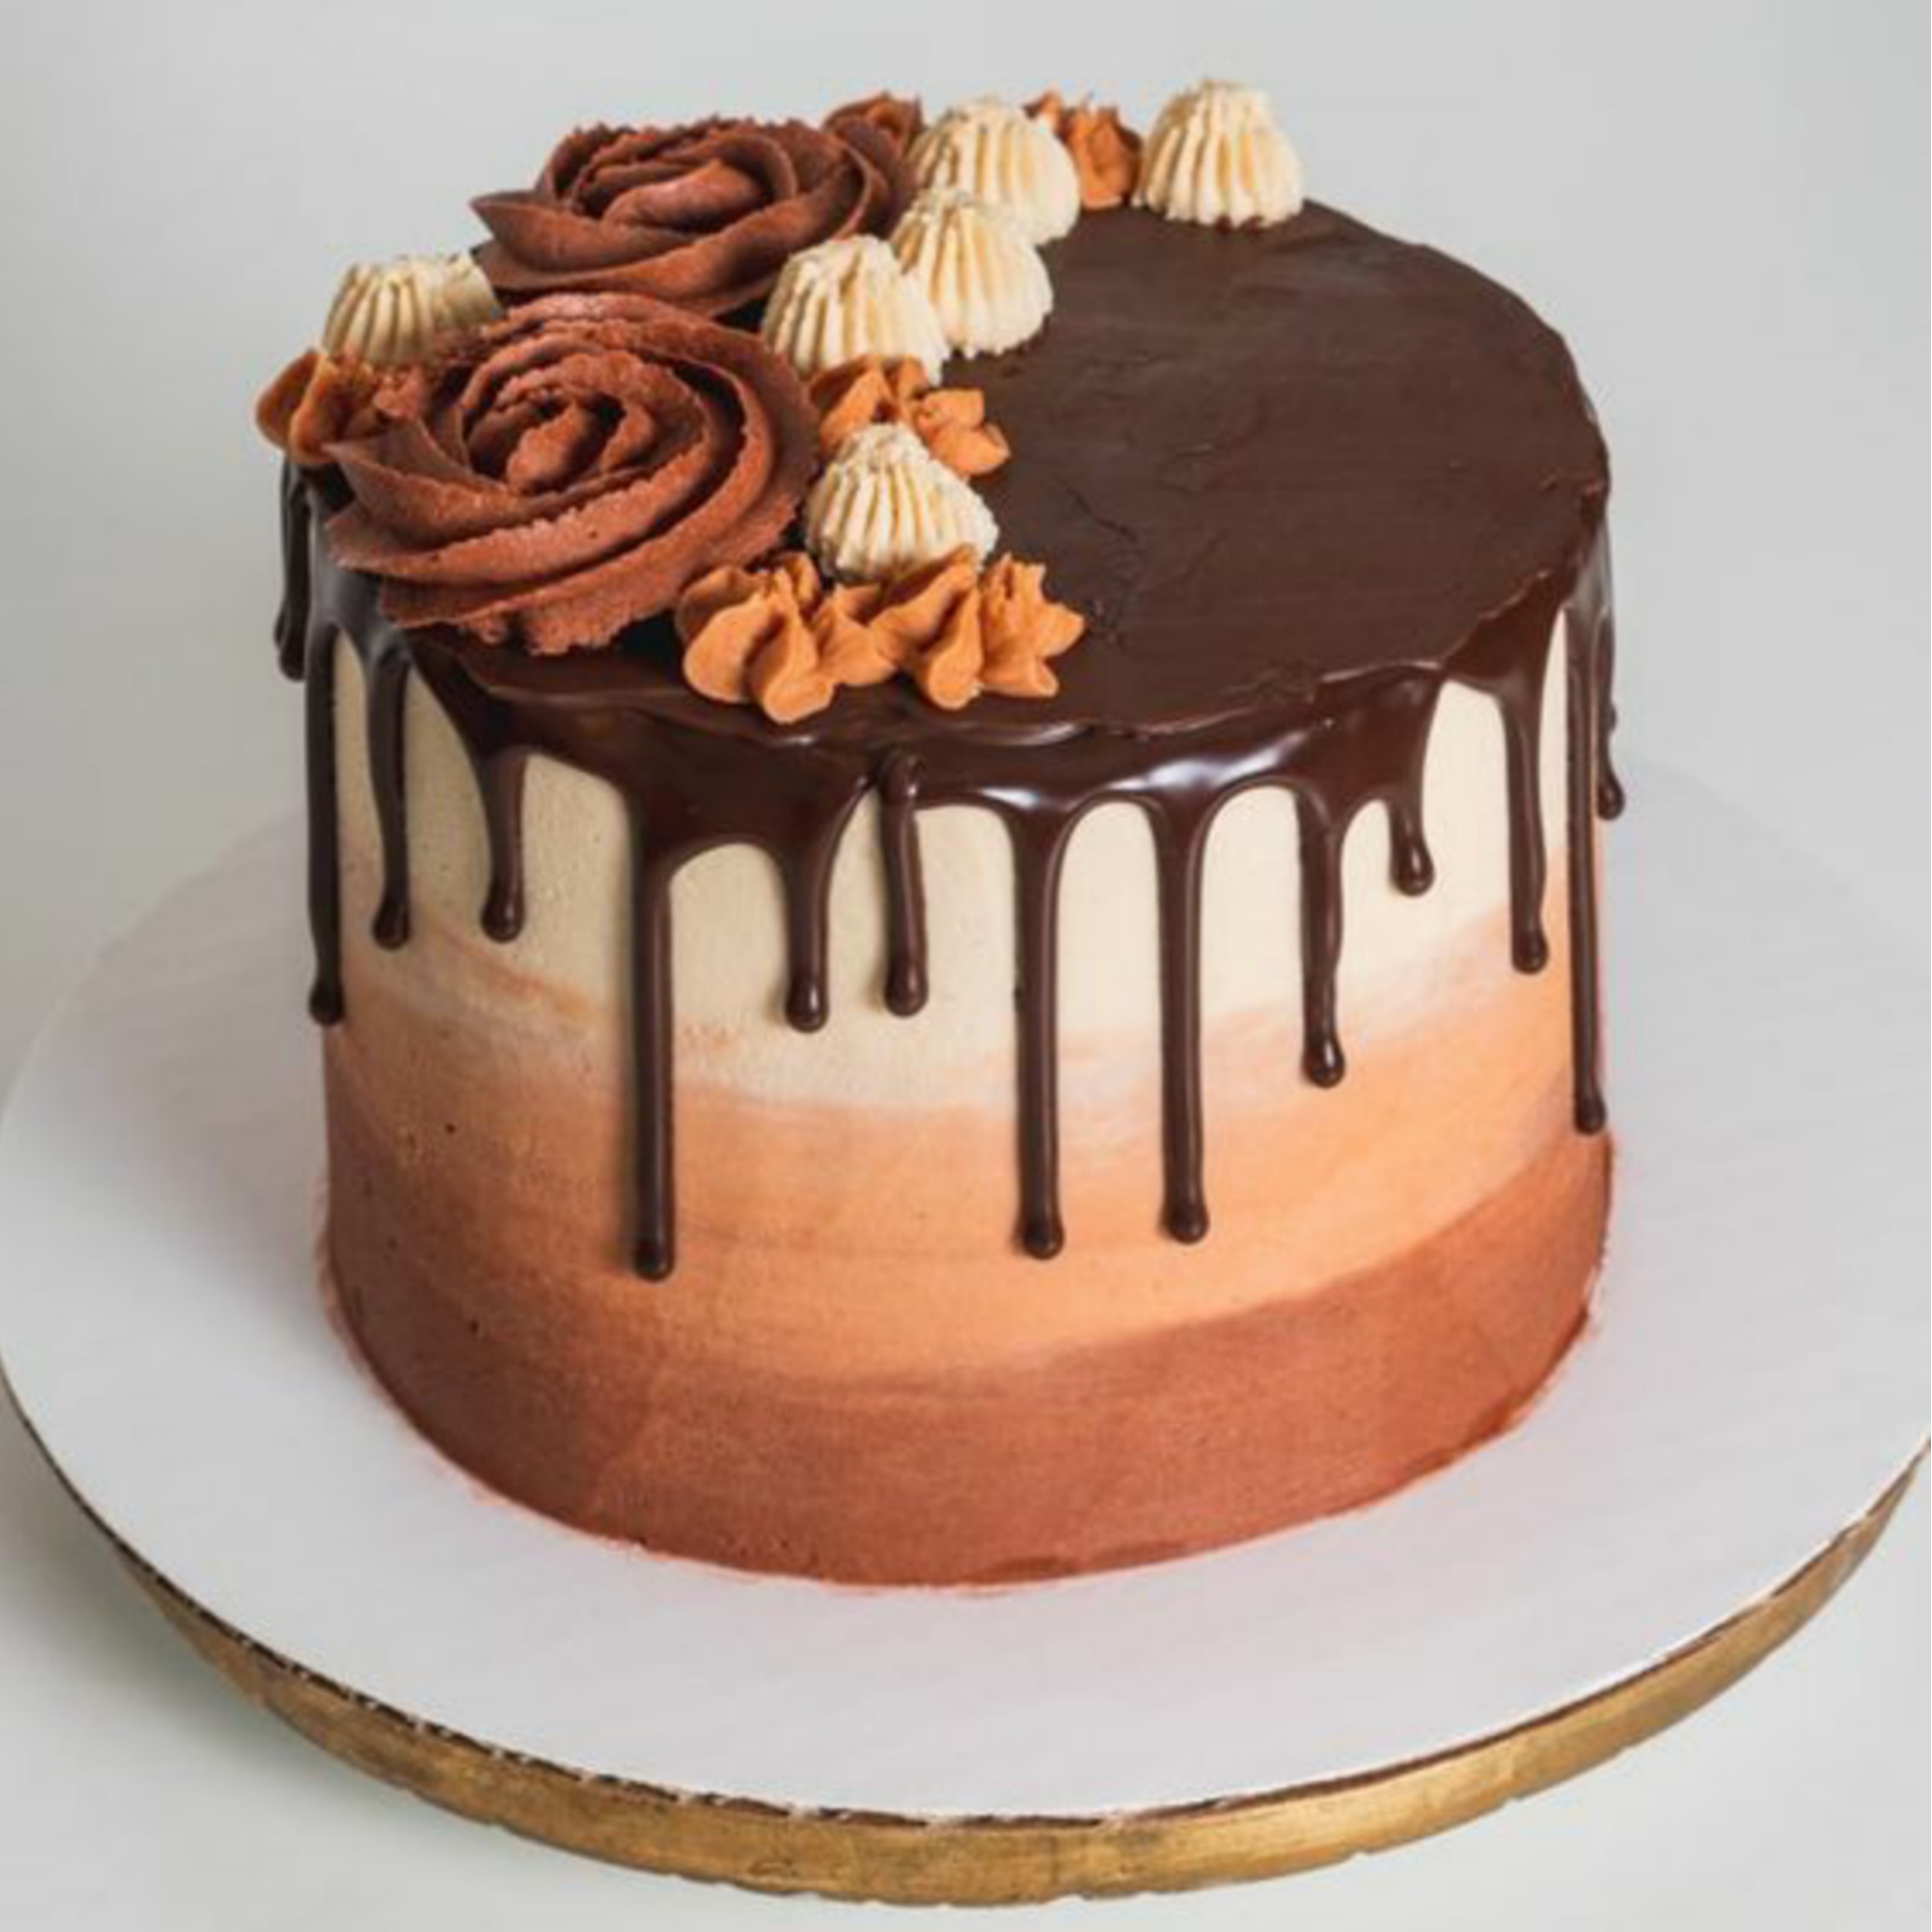 Itty Bitty Birthday Cake - Chocolate - Cute Cakes Bakery & Café